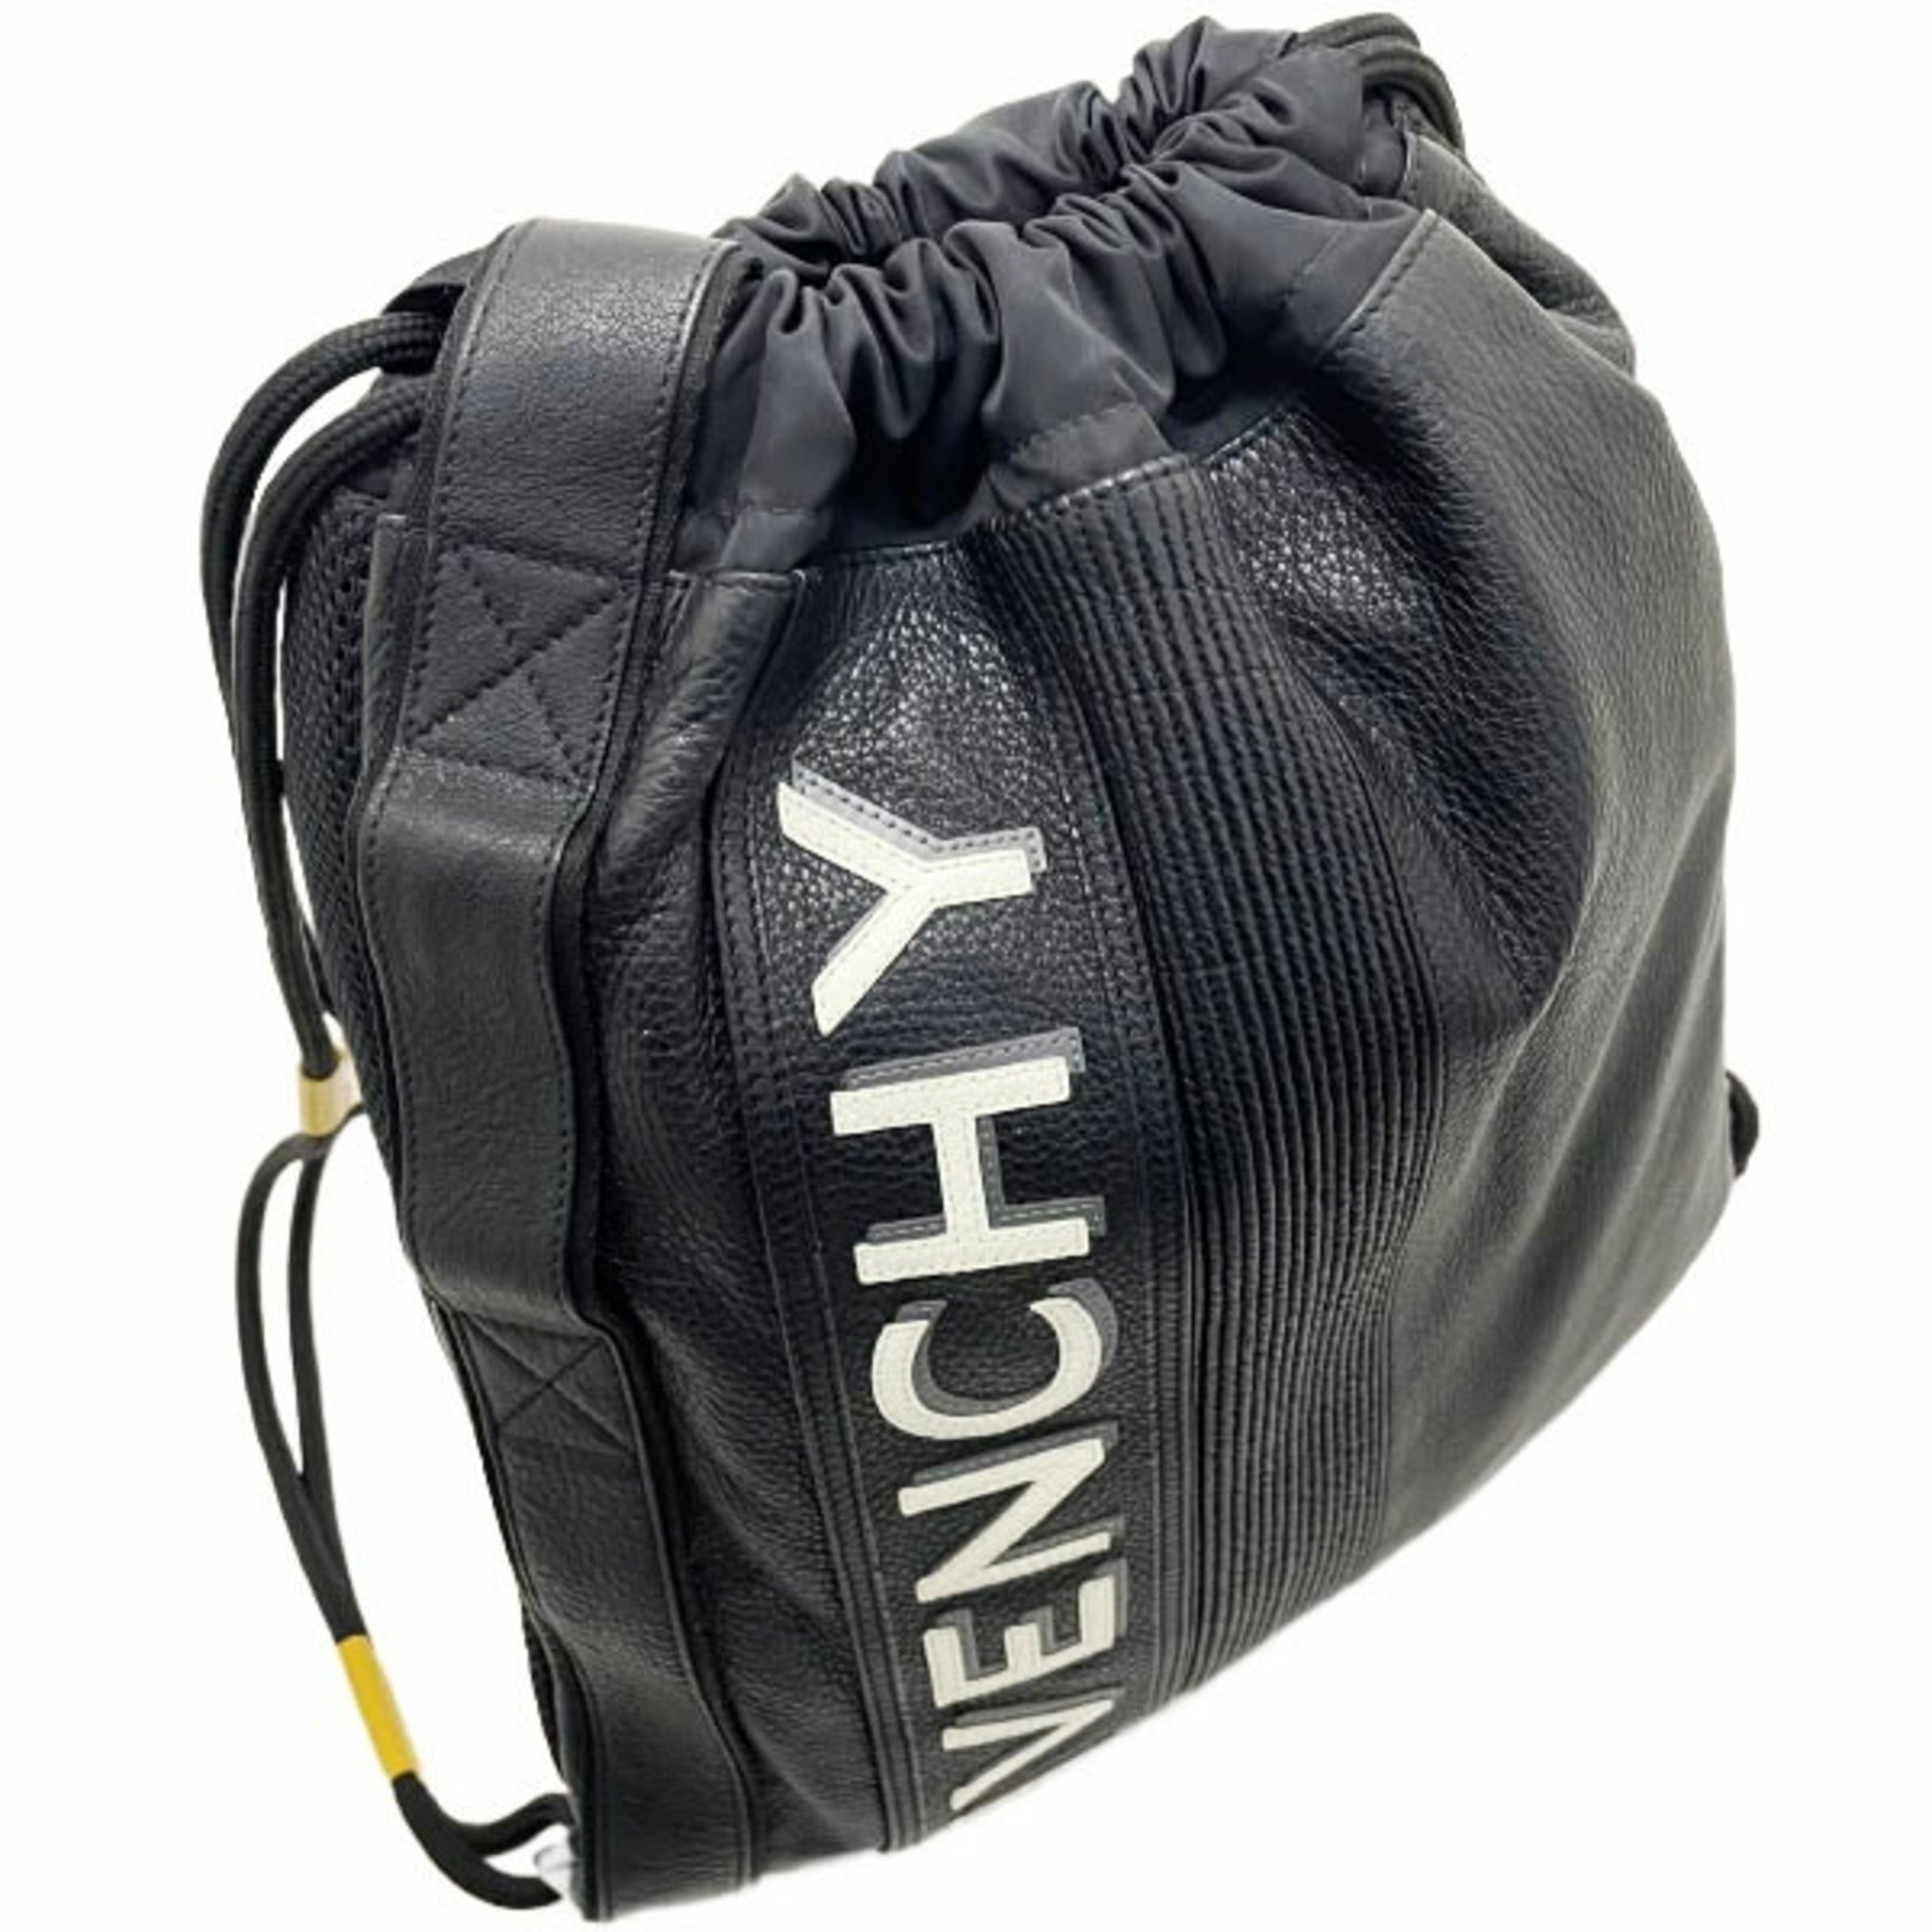 Givenchy Bag Pack MC3 Drawstring Leather Nylon Black BK502SK09 GIVENCHY Rucksack Knapsack Day Men's SW-13037